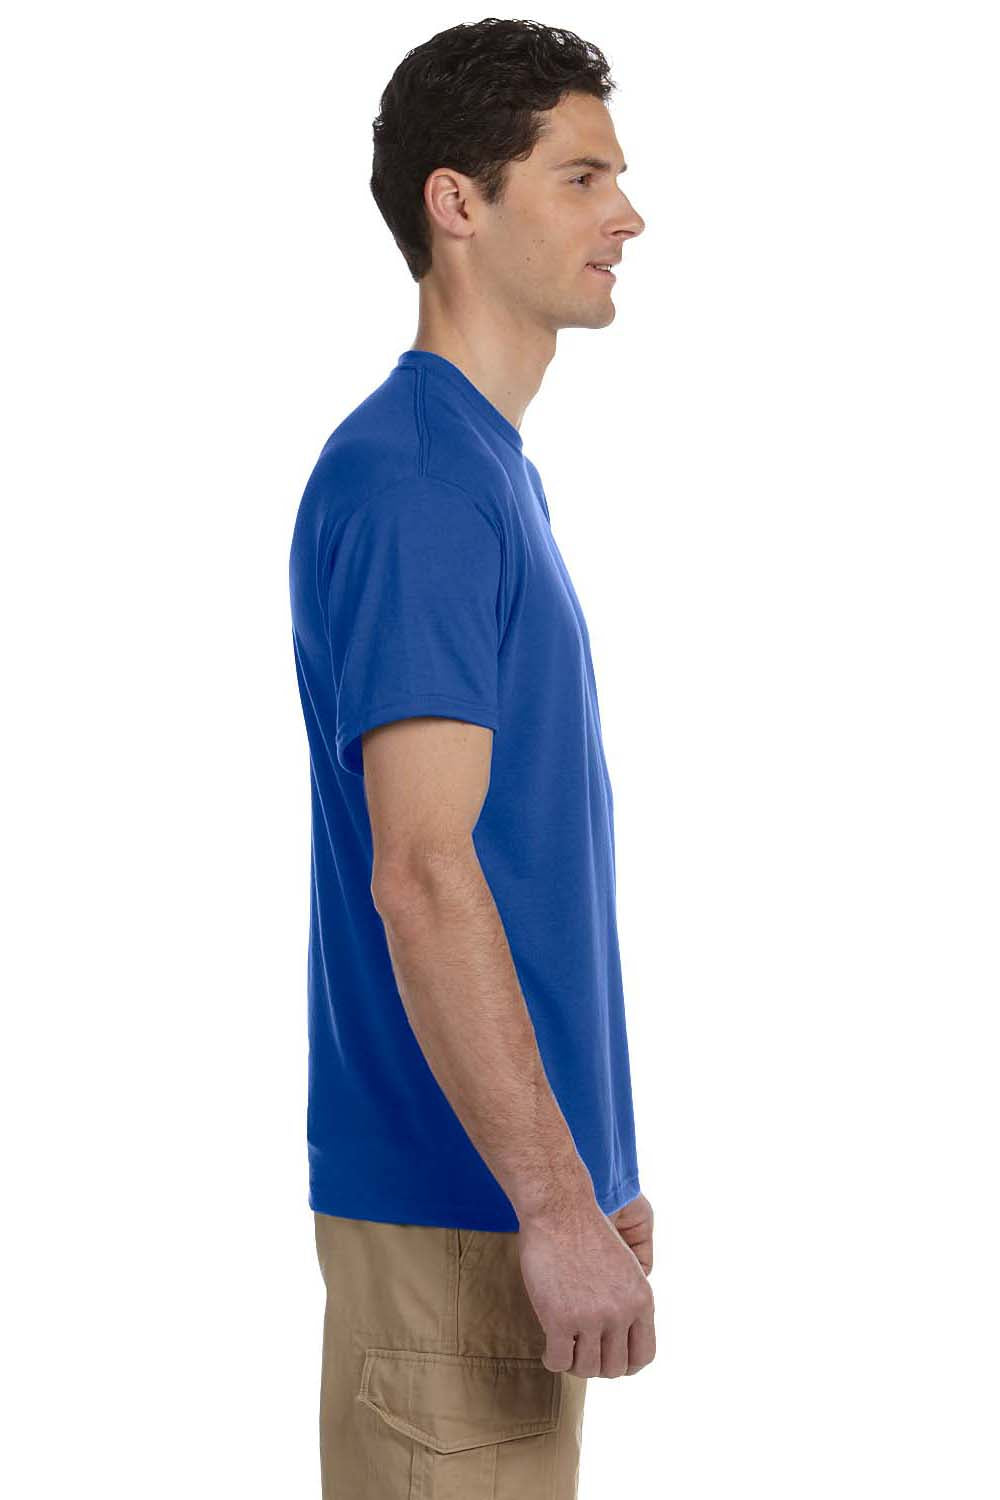 Jerzees 21M Mens Dri-Power Moisture Wicking Short Sleeve Crewneck T-Shirt Royal Blue Side